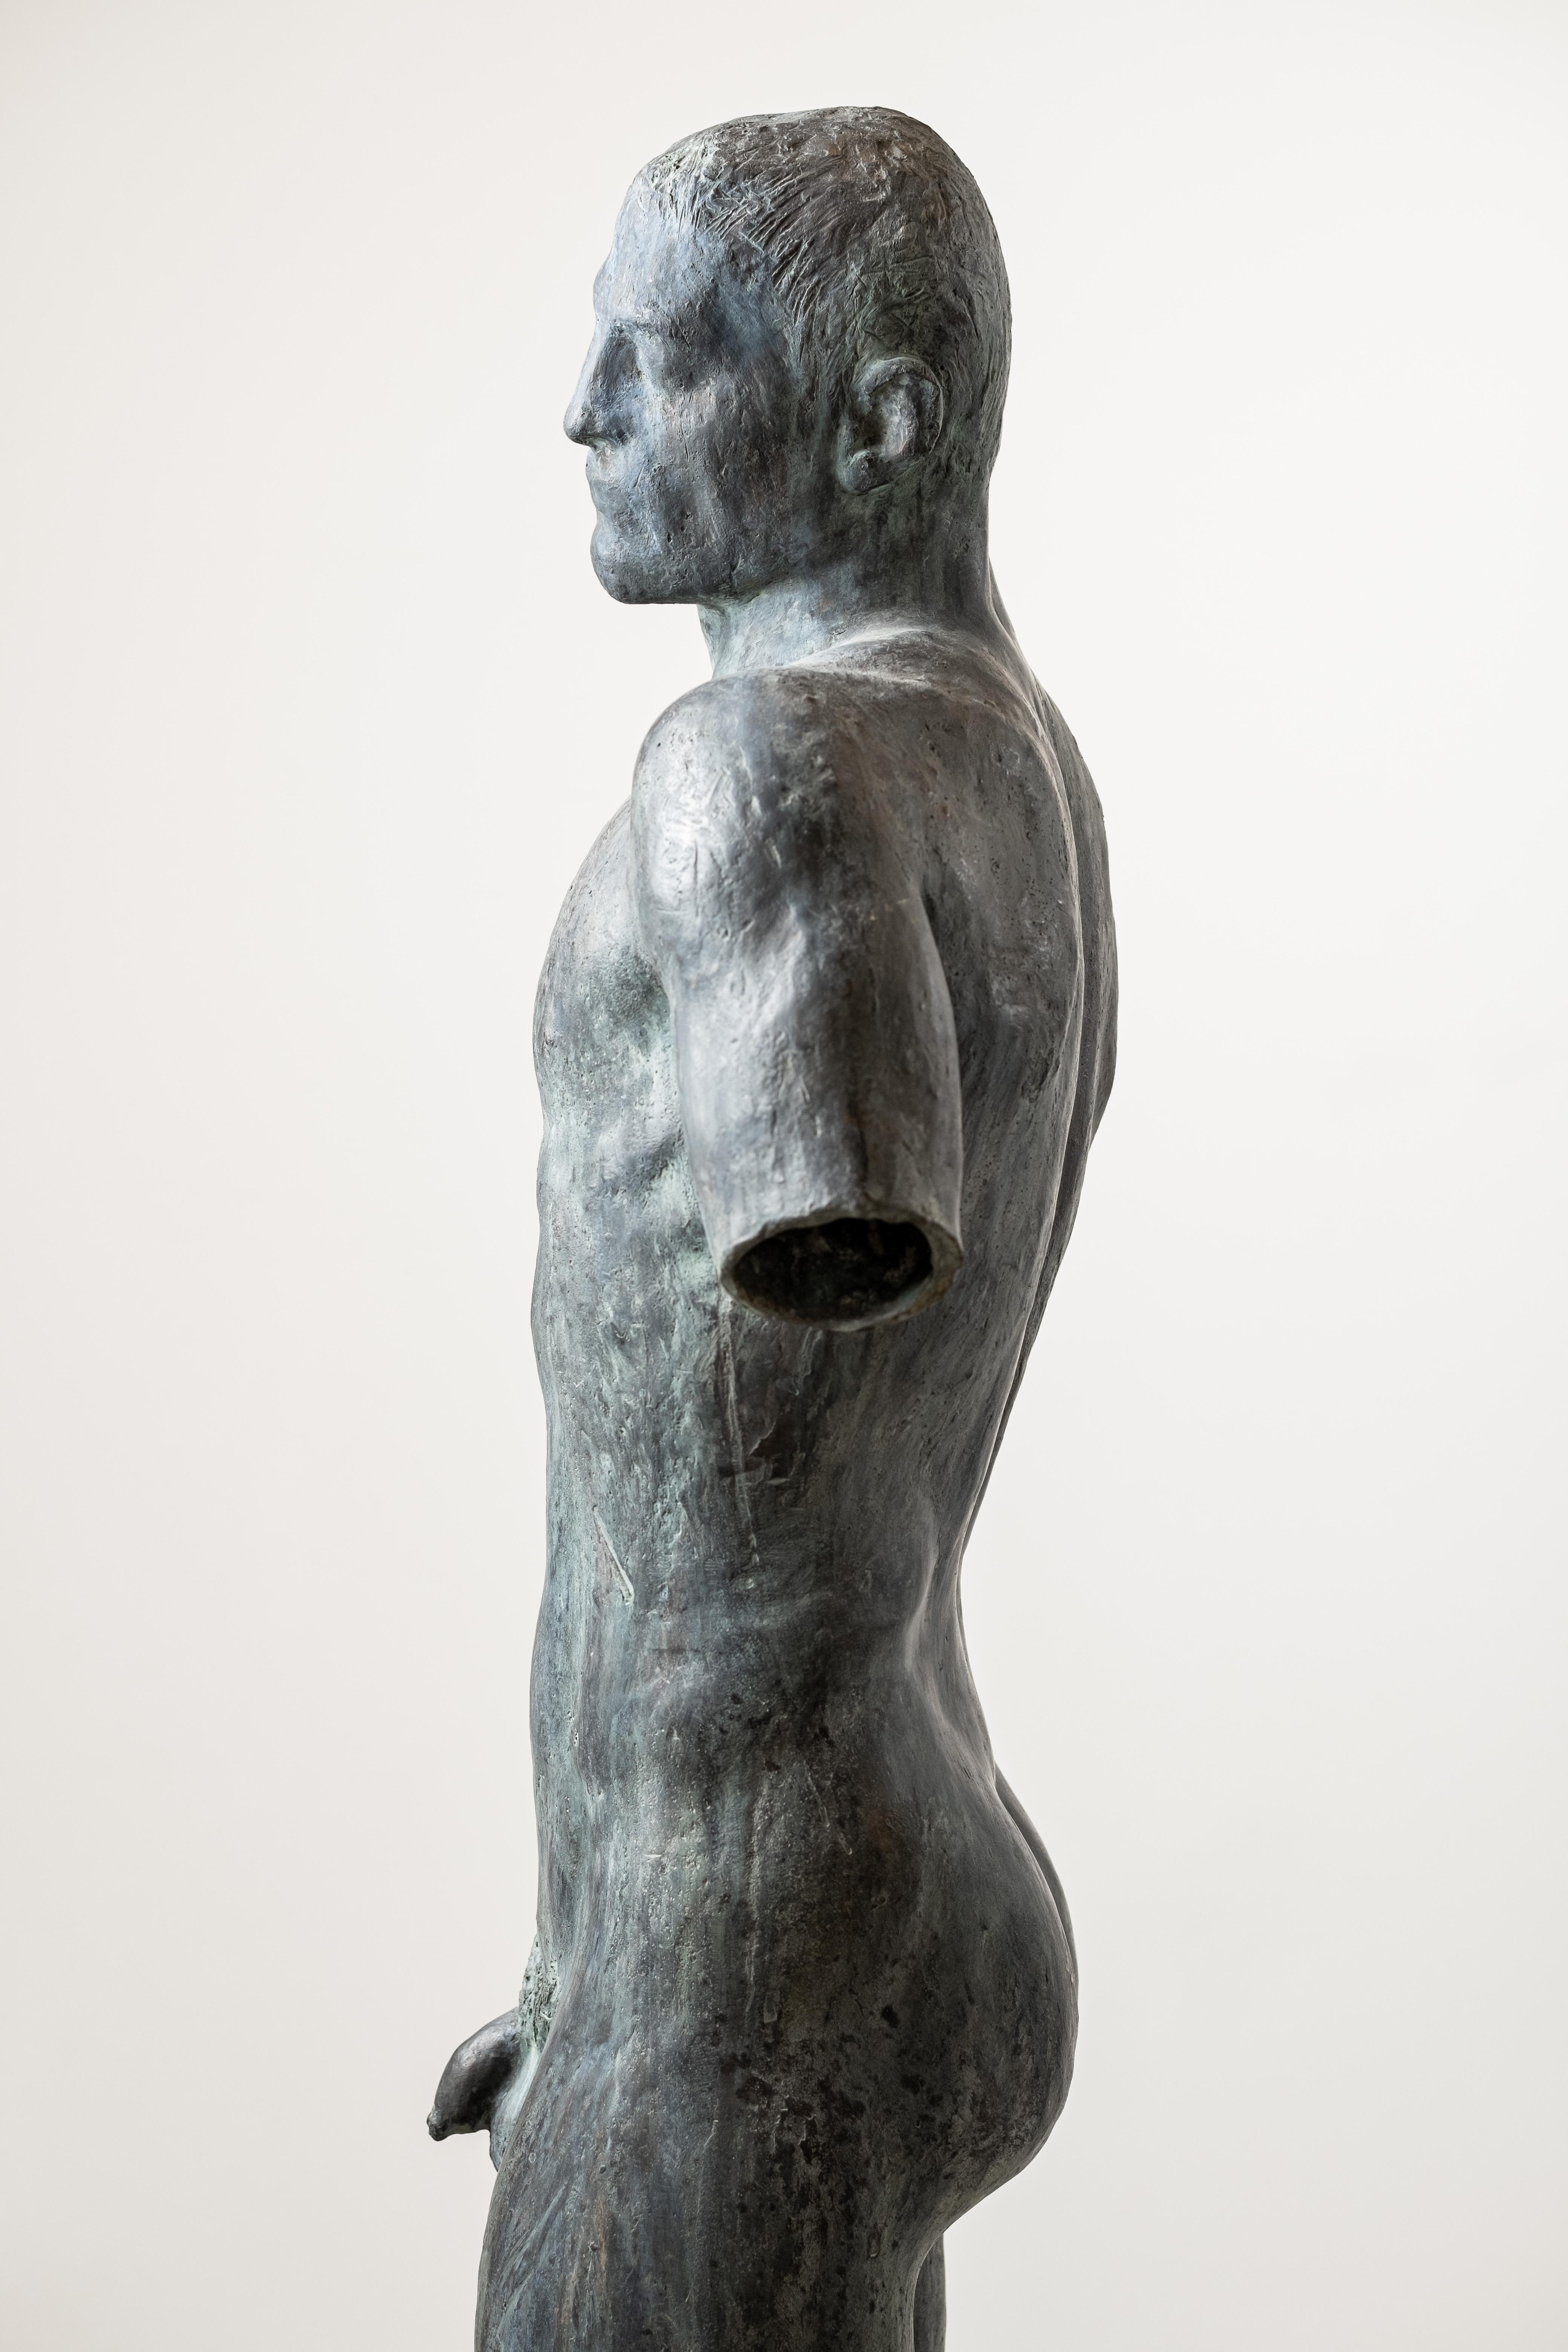 Adam's Torso - Figurative Sculpture Man Bronze Green Patina - Gold Nude Sculpture by Volodymyr Kochmar